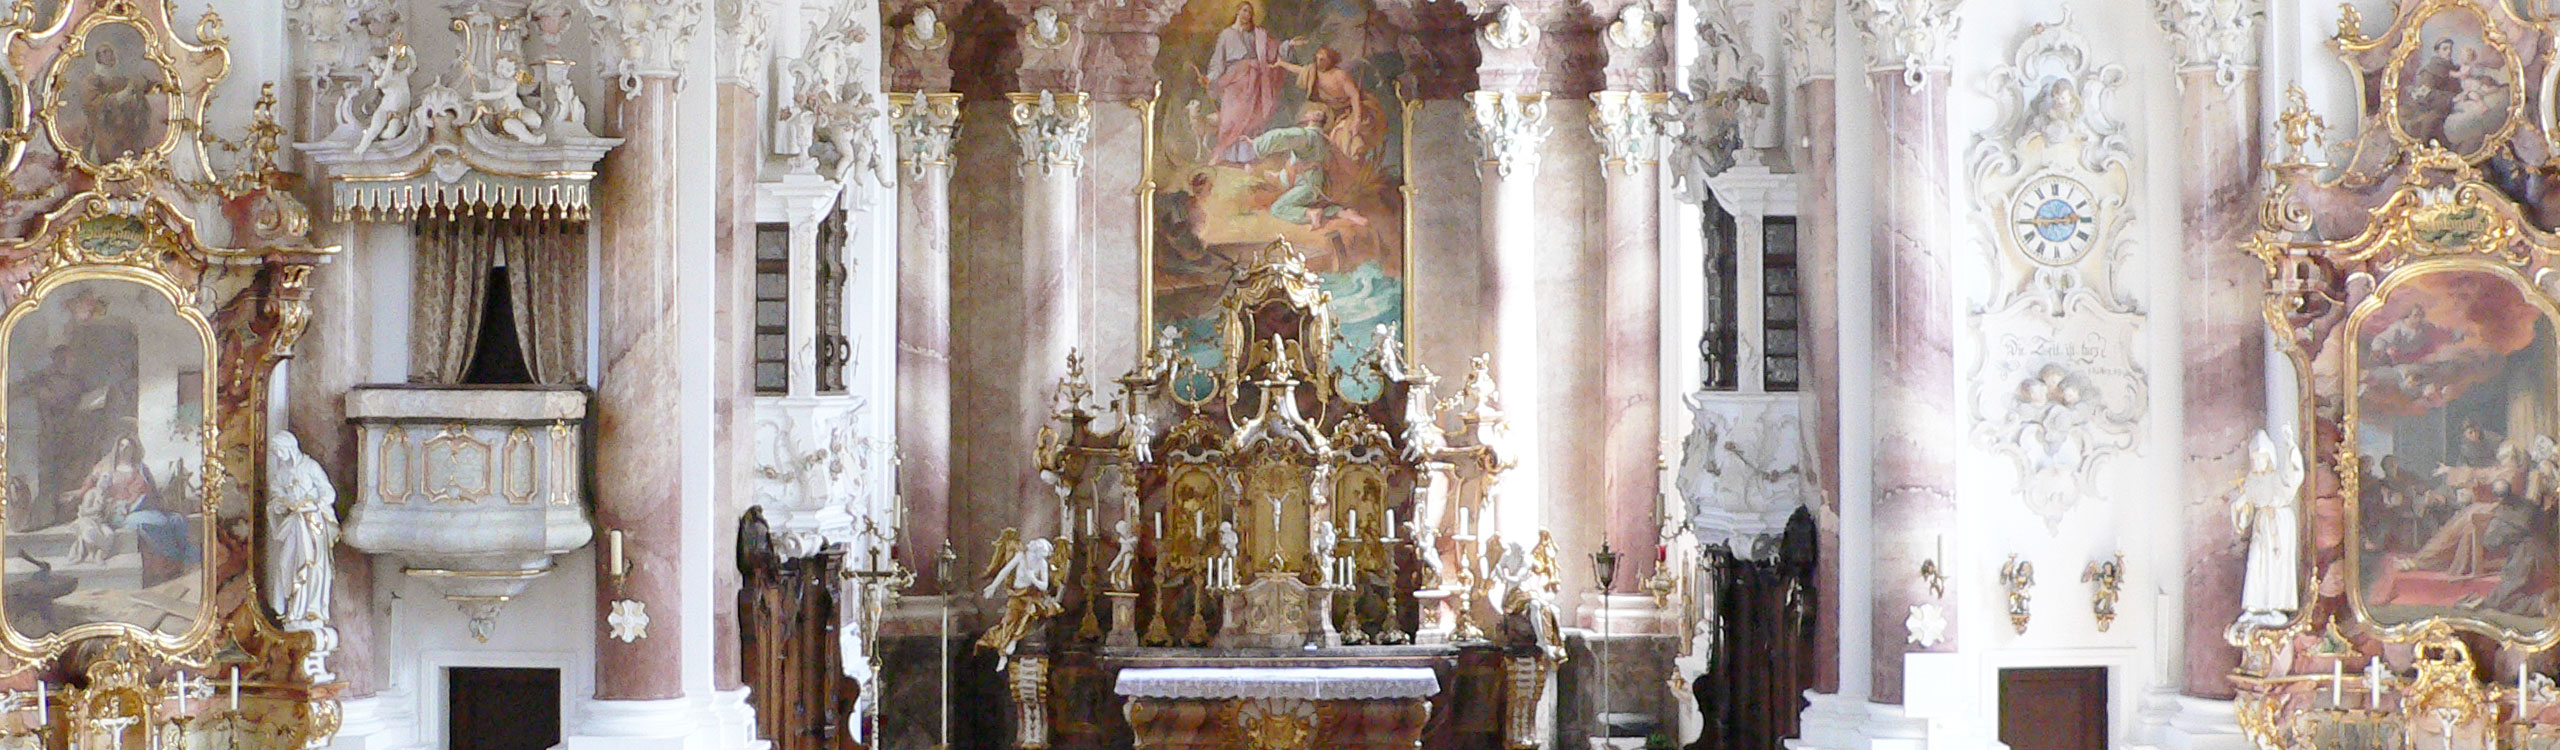 Altarraum St. Andreas Nesselwang